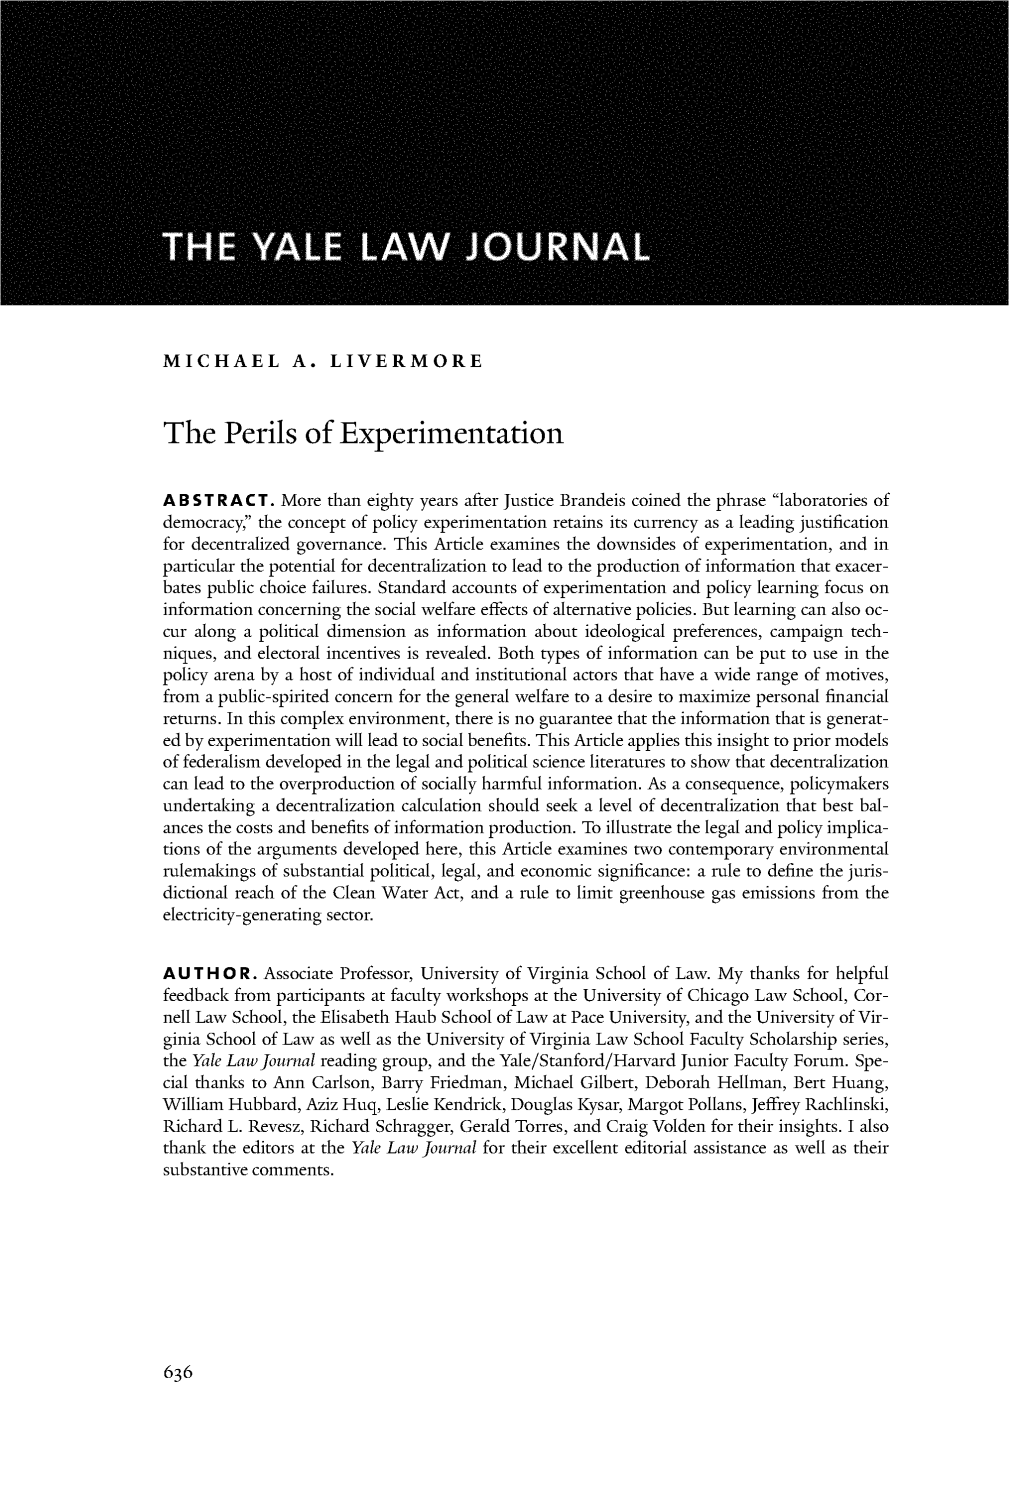 The Perils of Experimentation